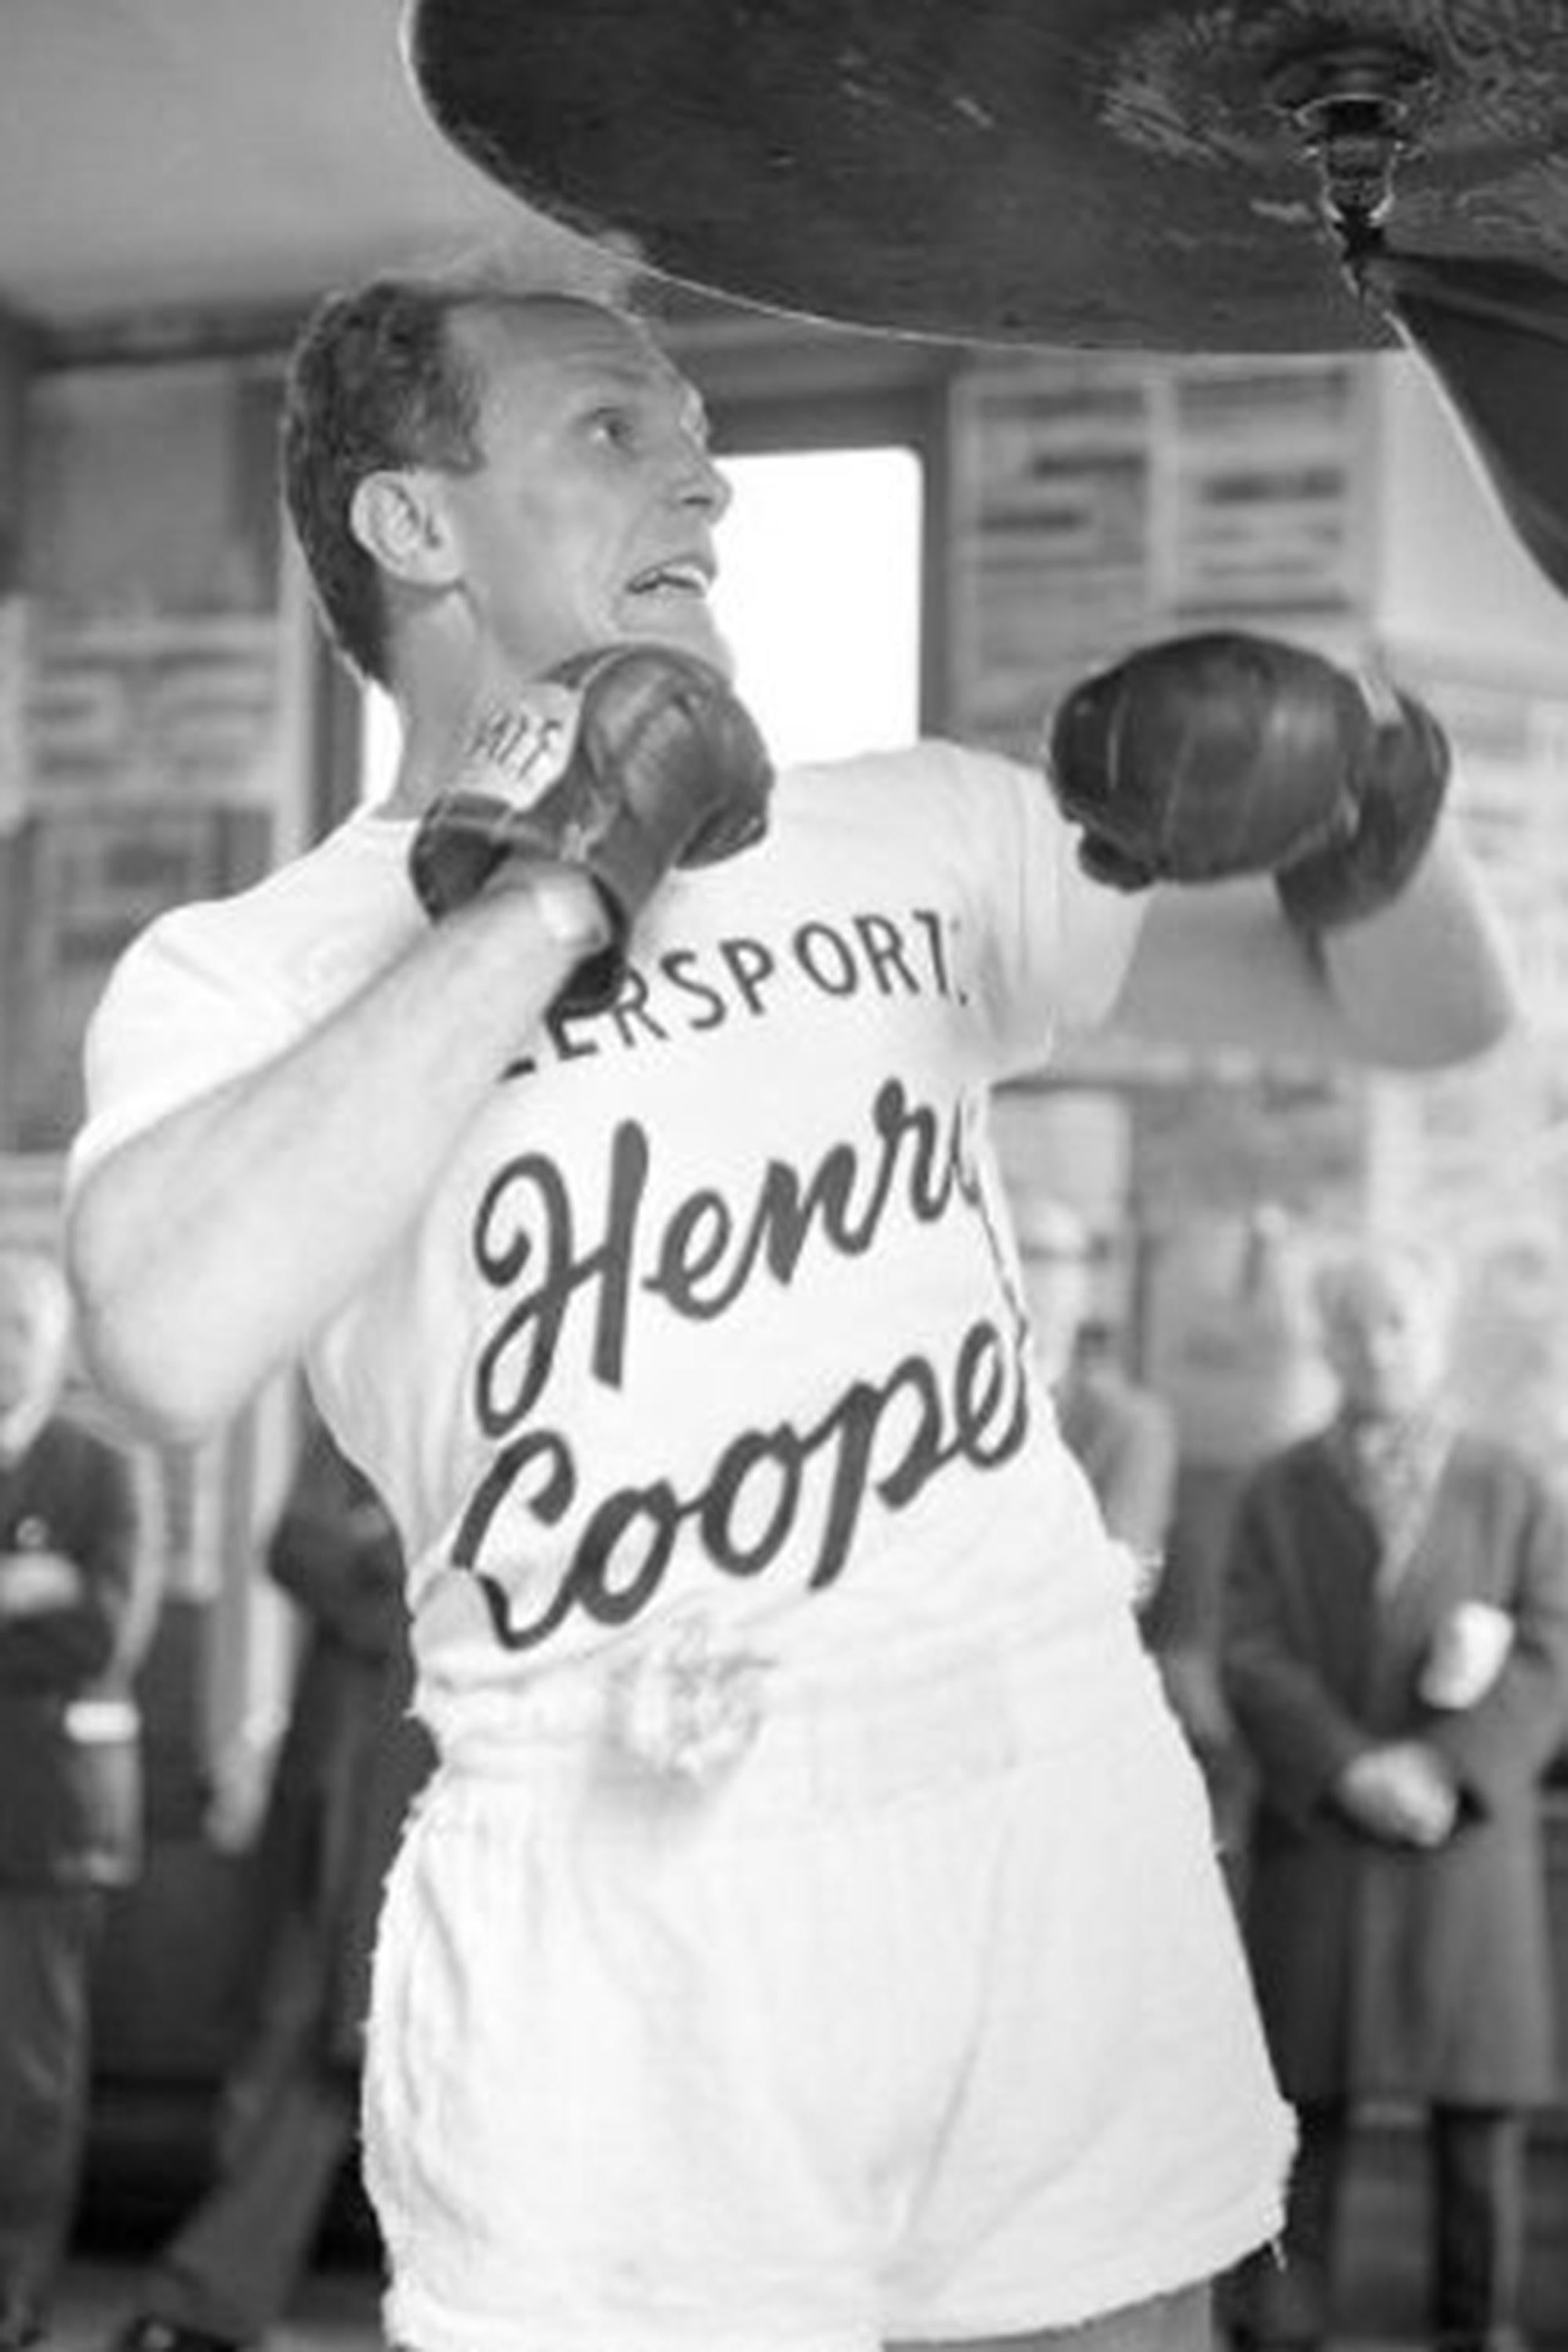 HENRY COOPER 1966 LIGHT-WEIGHT TRAINING CAMP T-SHIRT